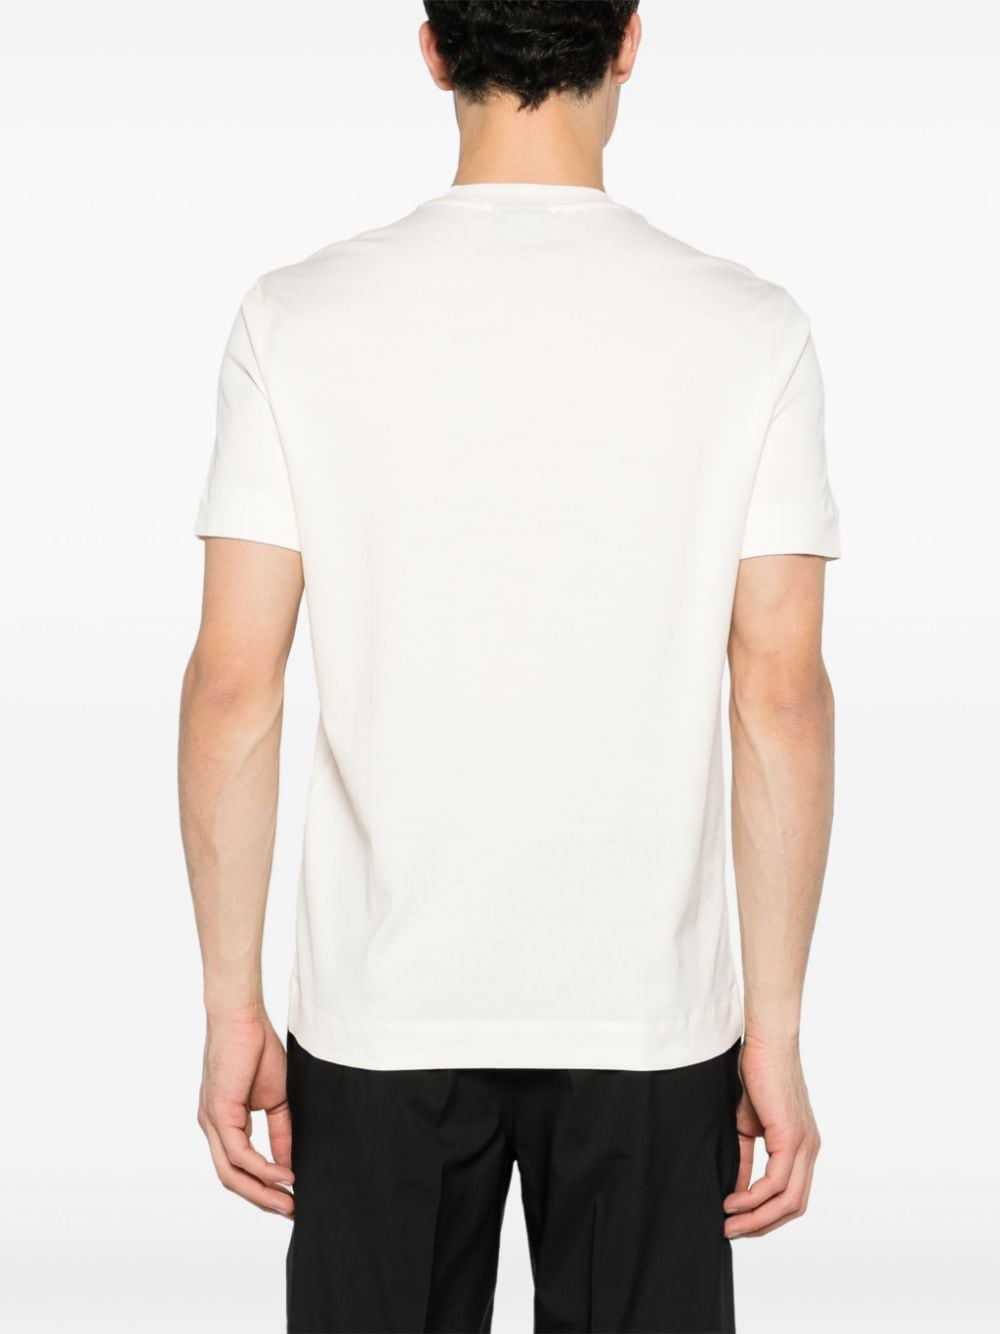 T-shirt blanc avec logo Aigle central